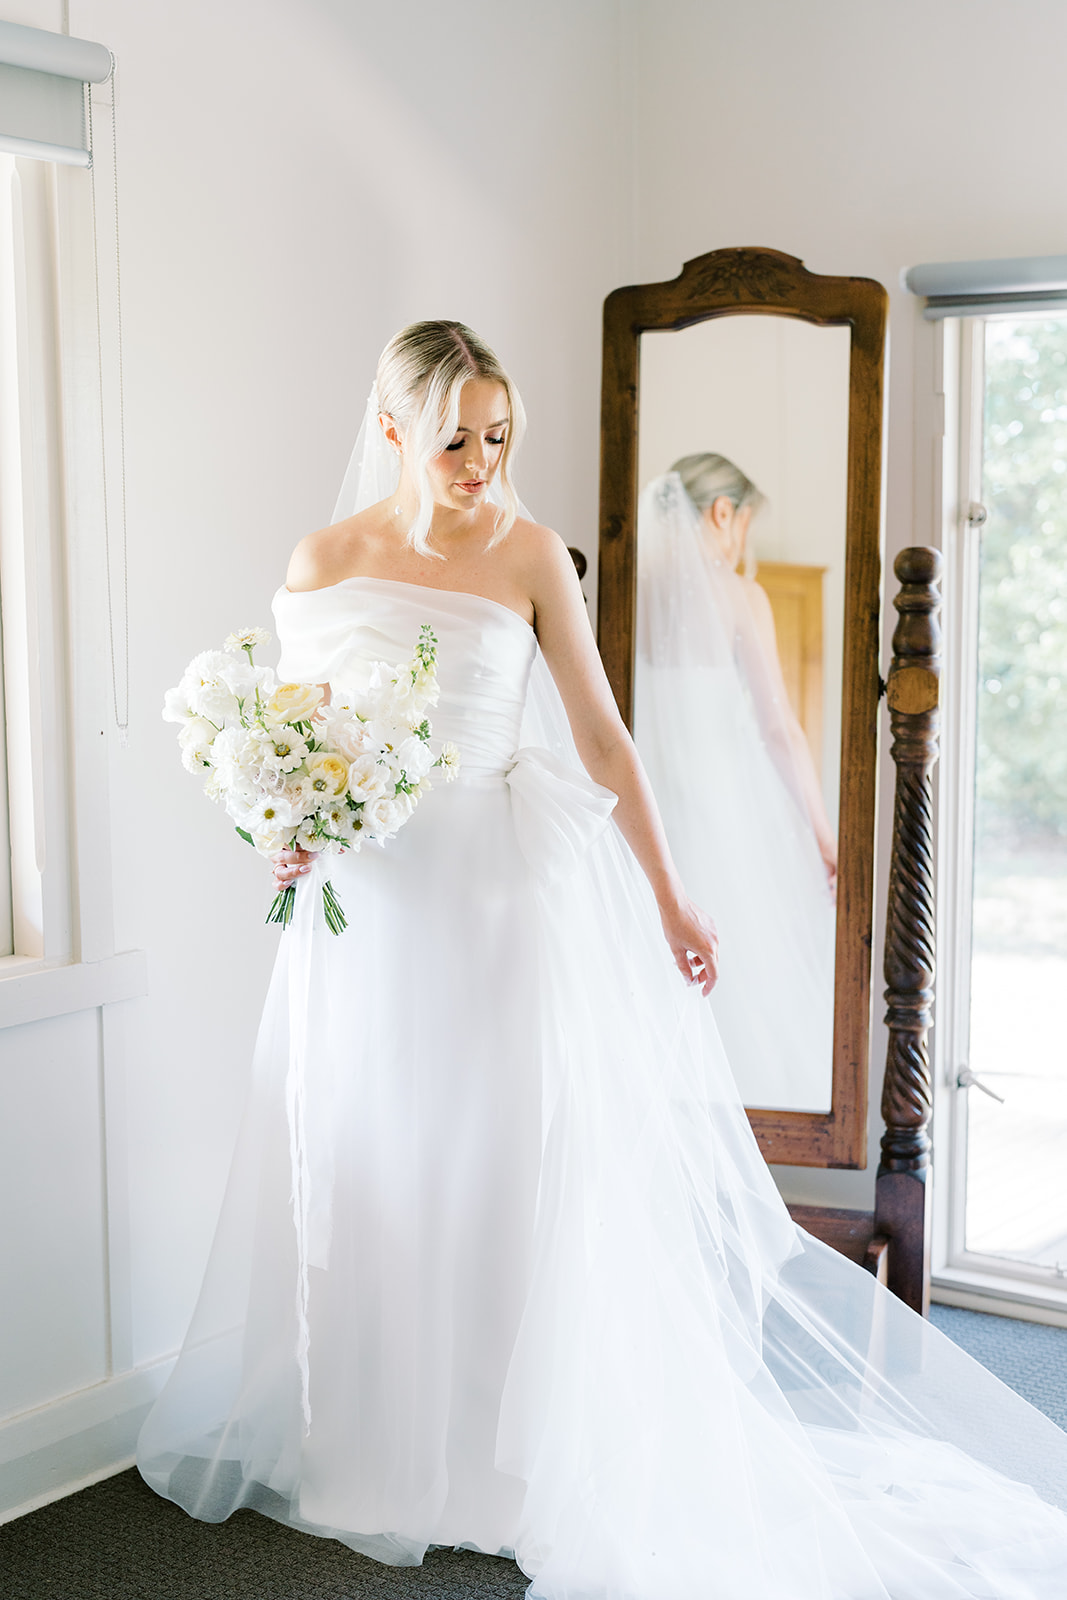 Custom-made Greta Kate wedding gown on the bride